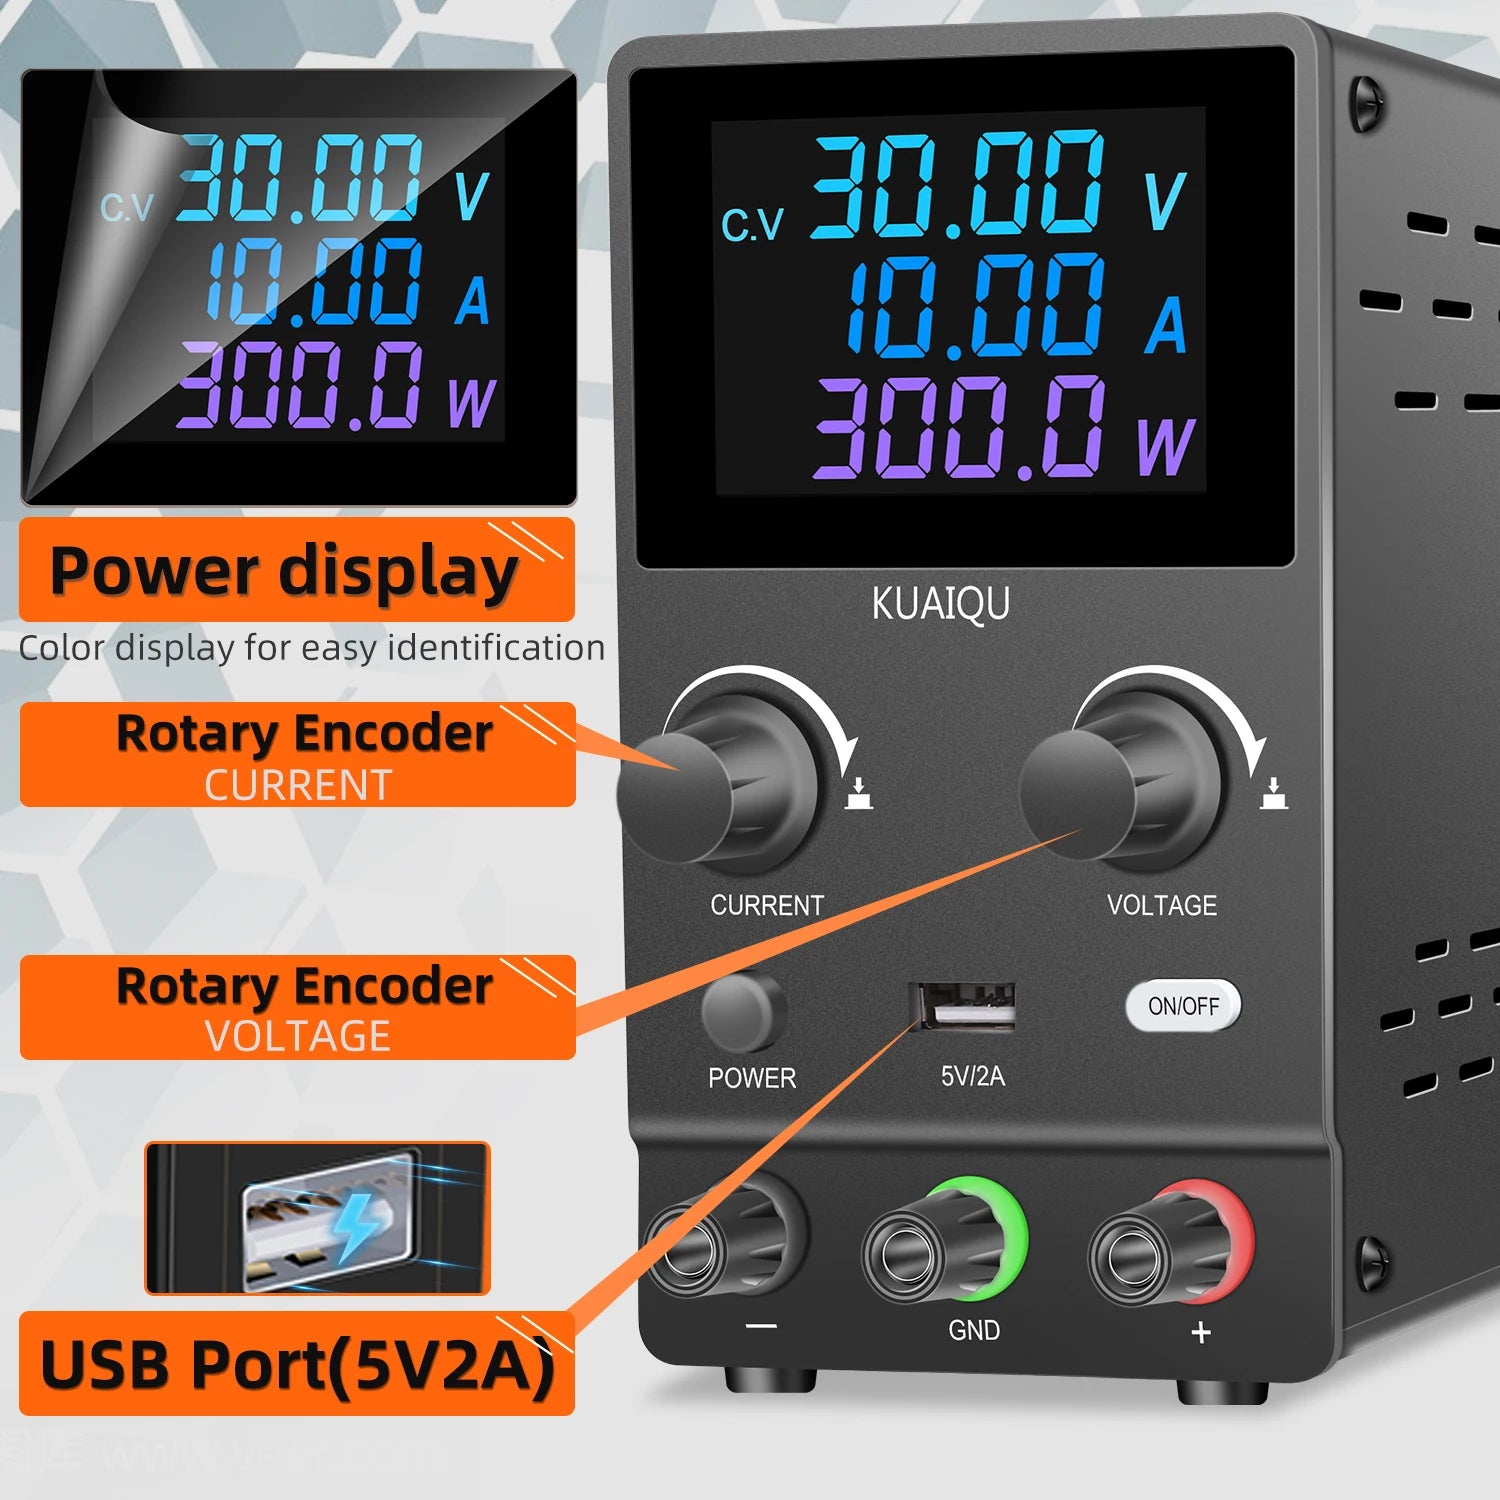 DC Power Supply, Adjustable Voltage, Digit Display